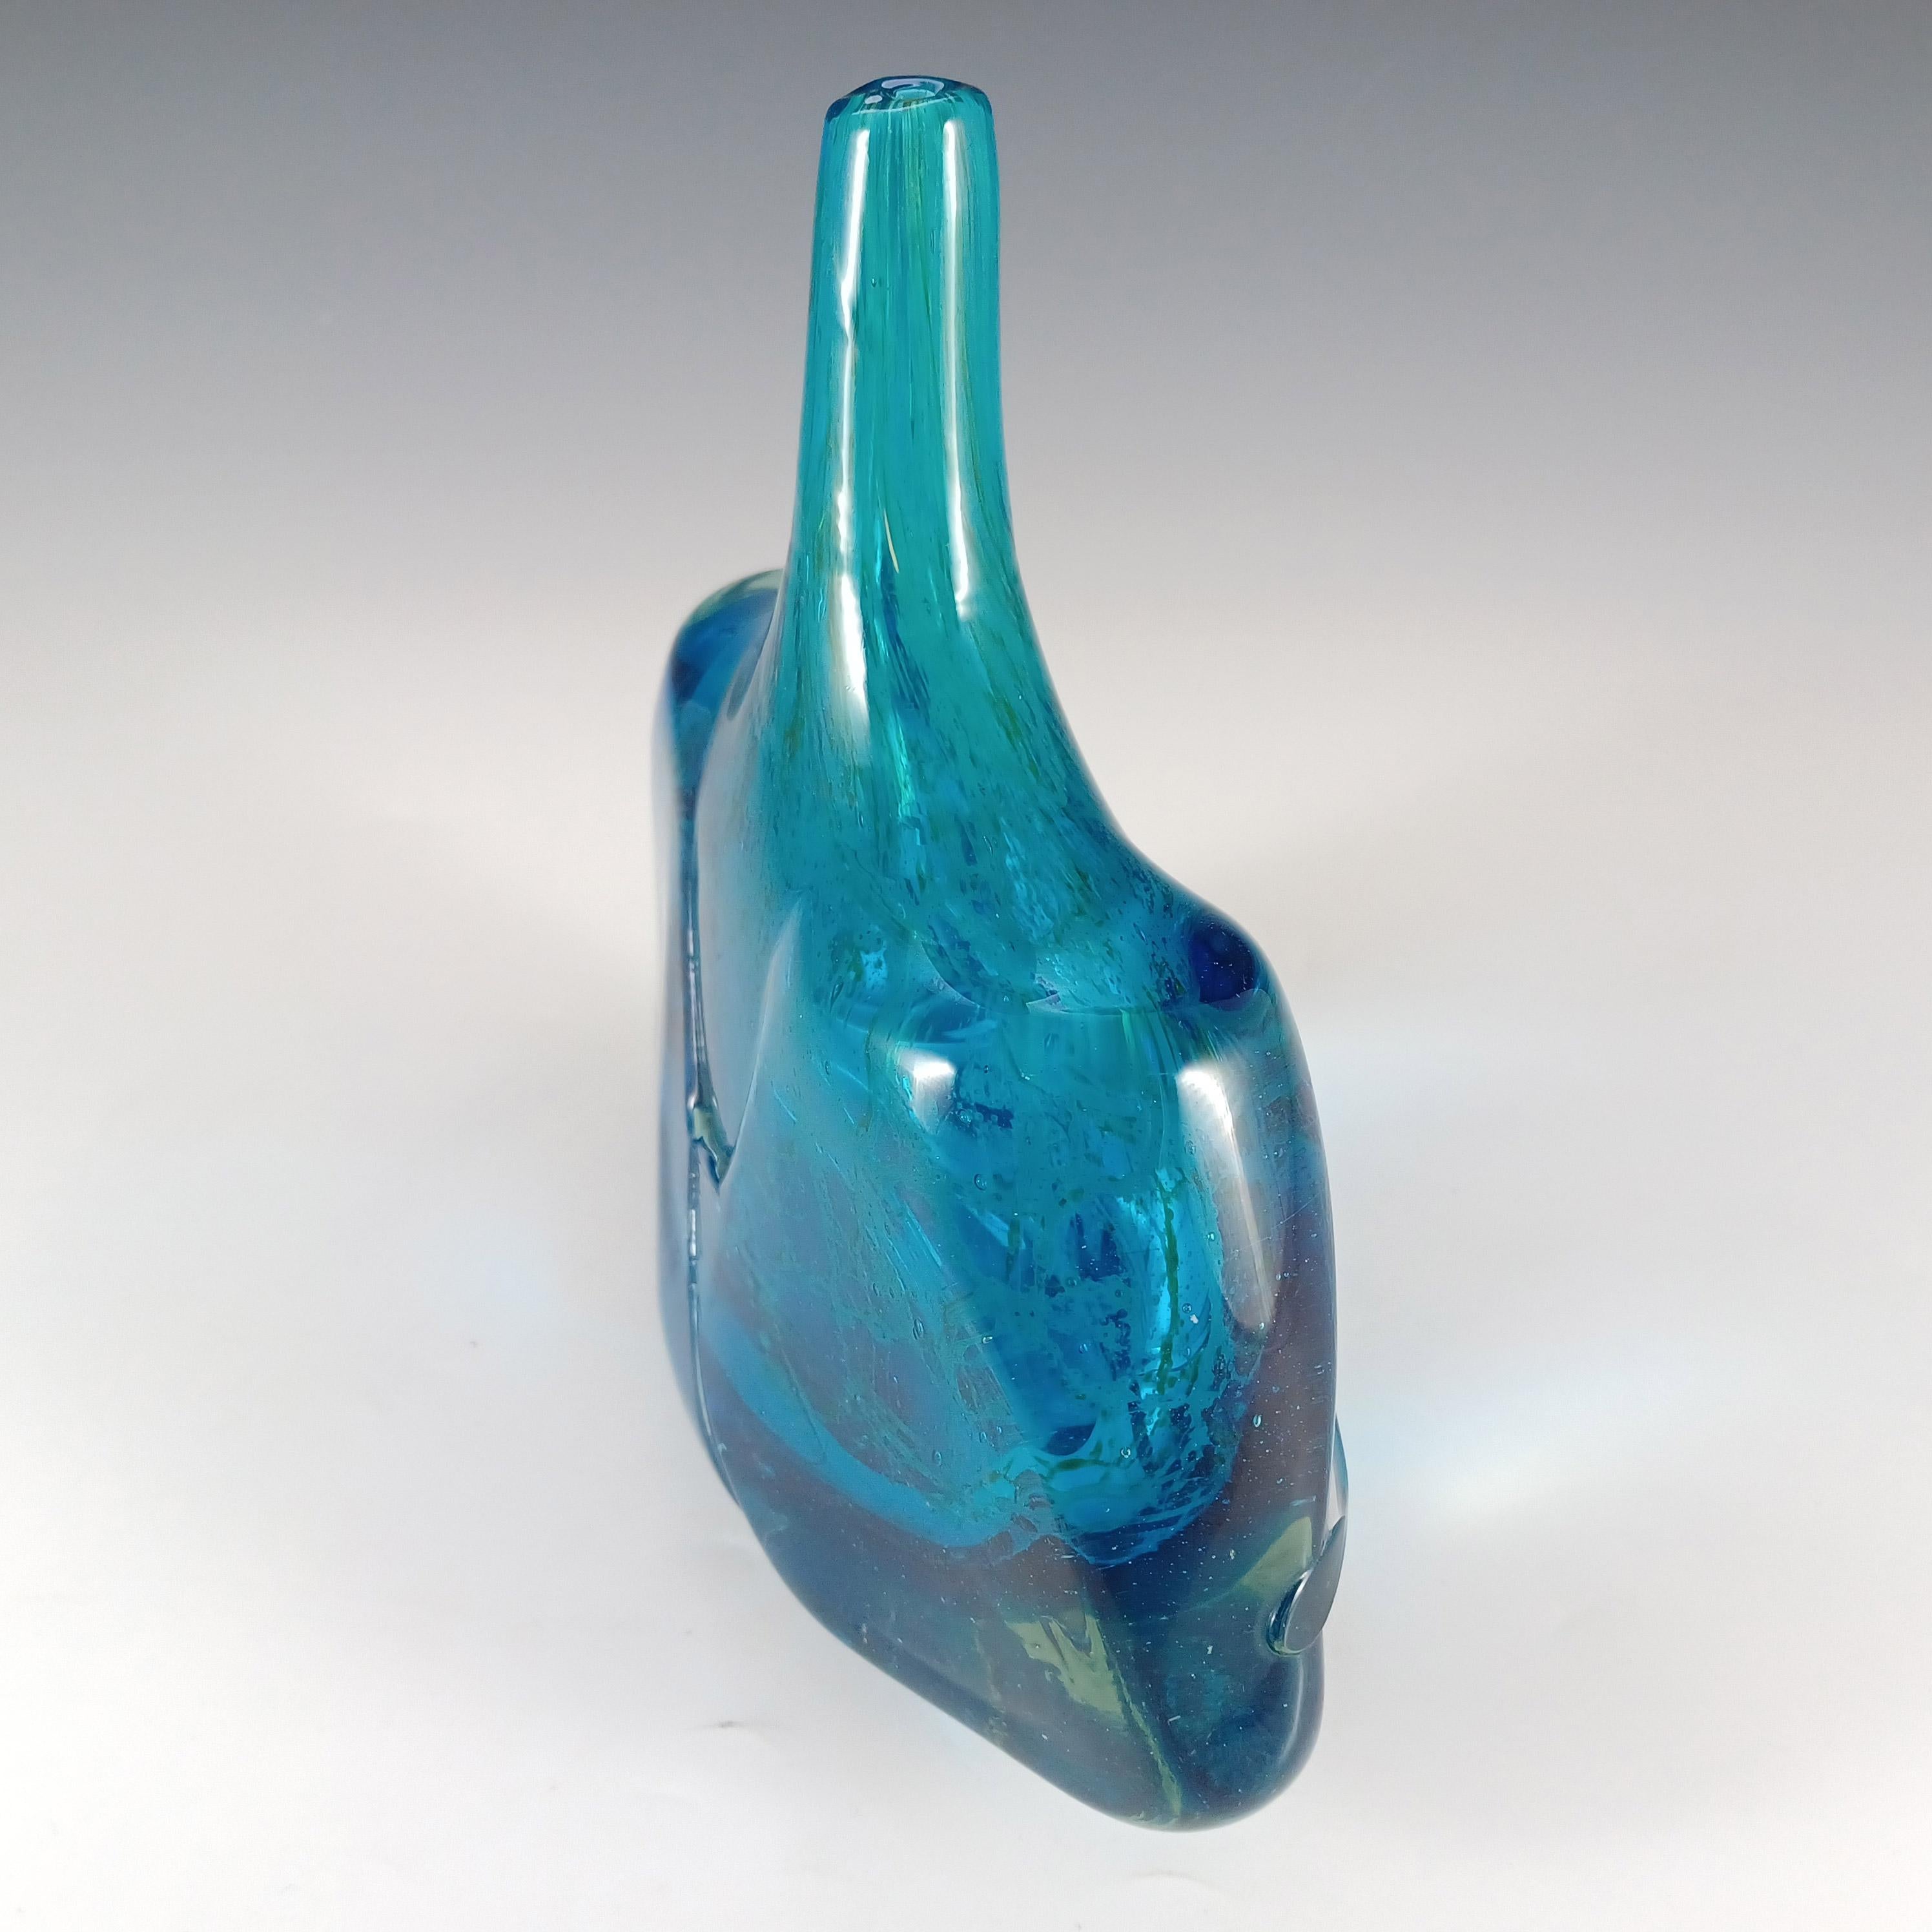 Mdina Maltese Blue Glass 'Fish' / 'Axe Head' Vase - Signed 1979 For Sale 2